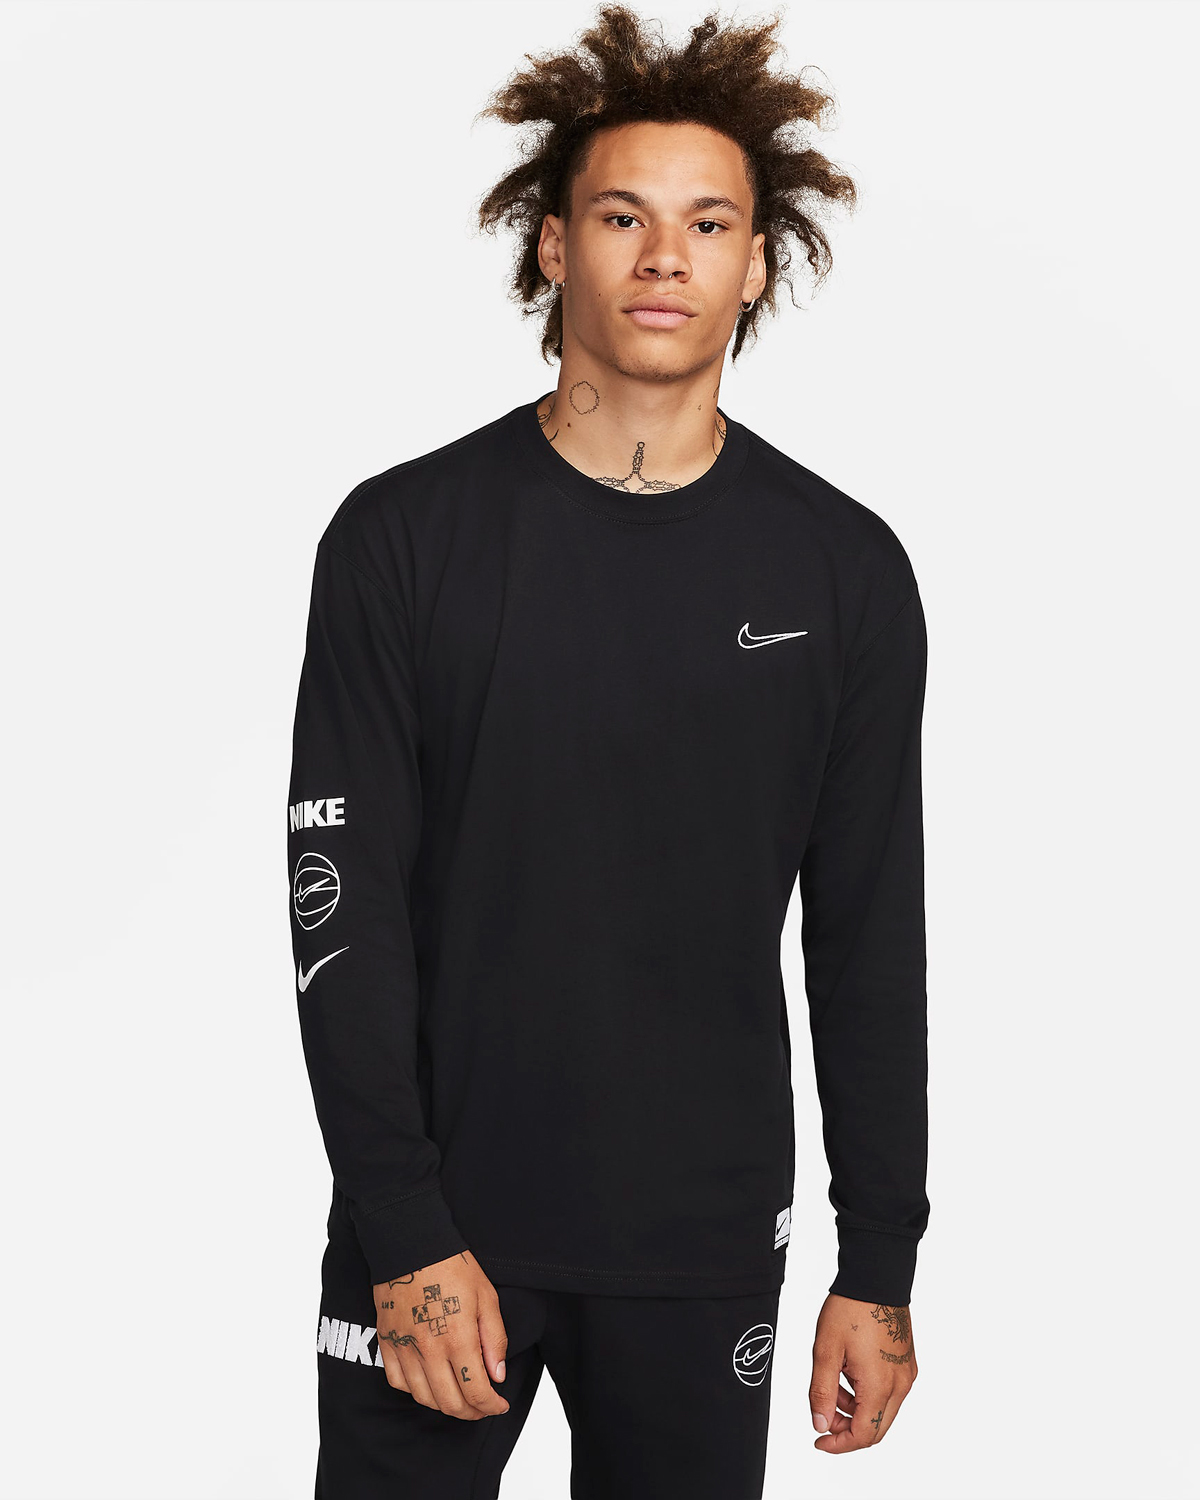 Nike-Max90-Long-Sleeve-Basketball-T-Shirt-Black-White-1